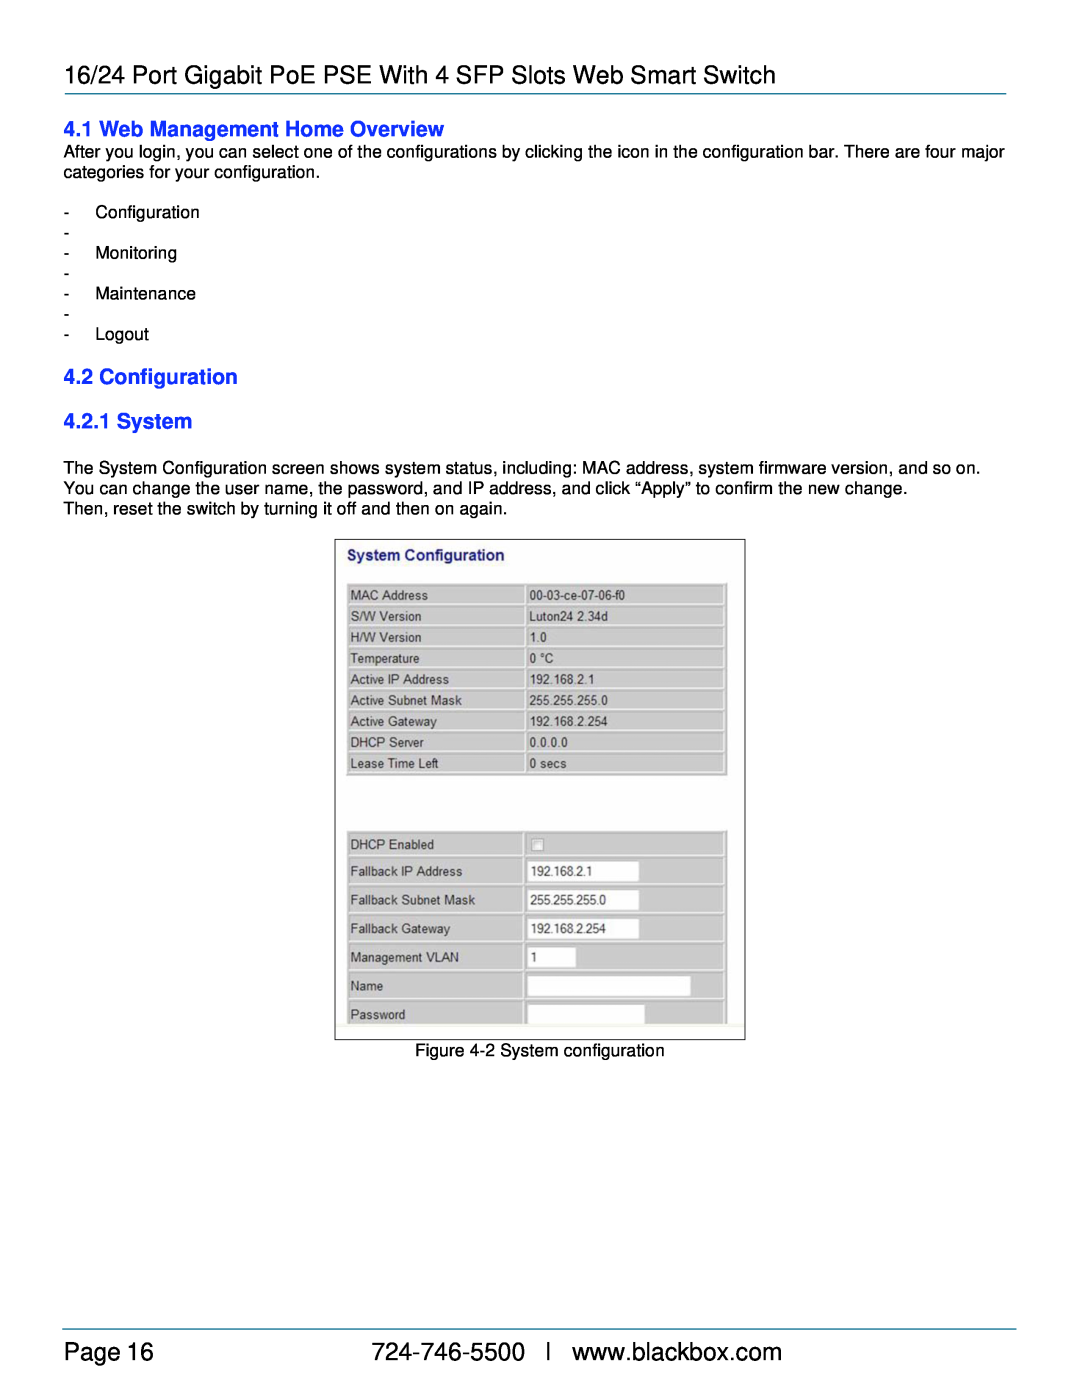 Black Box LPBG716A, LPBG724A manual Web Management Home Overview, 4.2Configuration 4.2.1 System, Page 